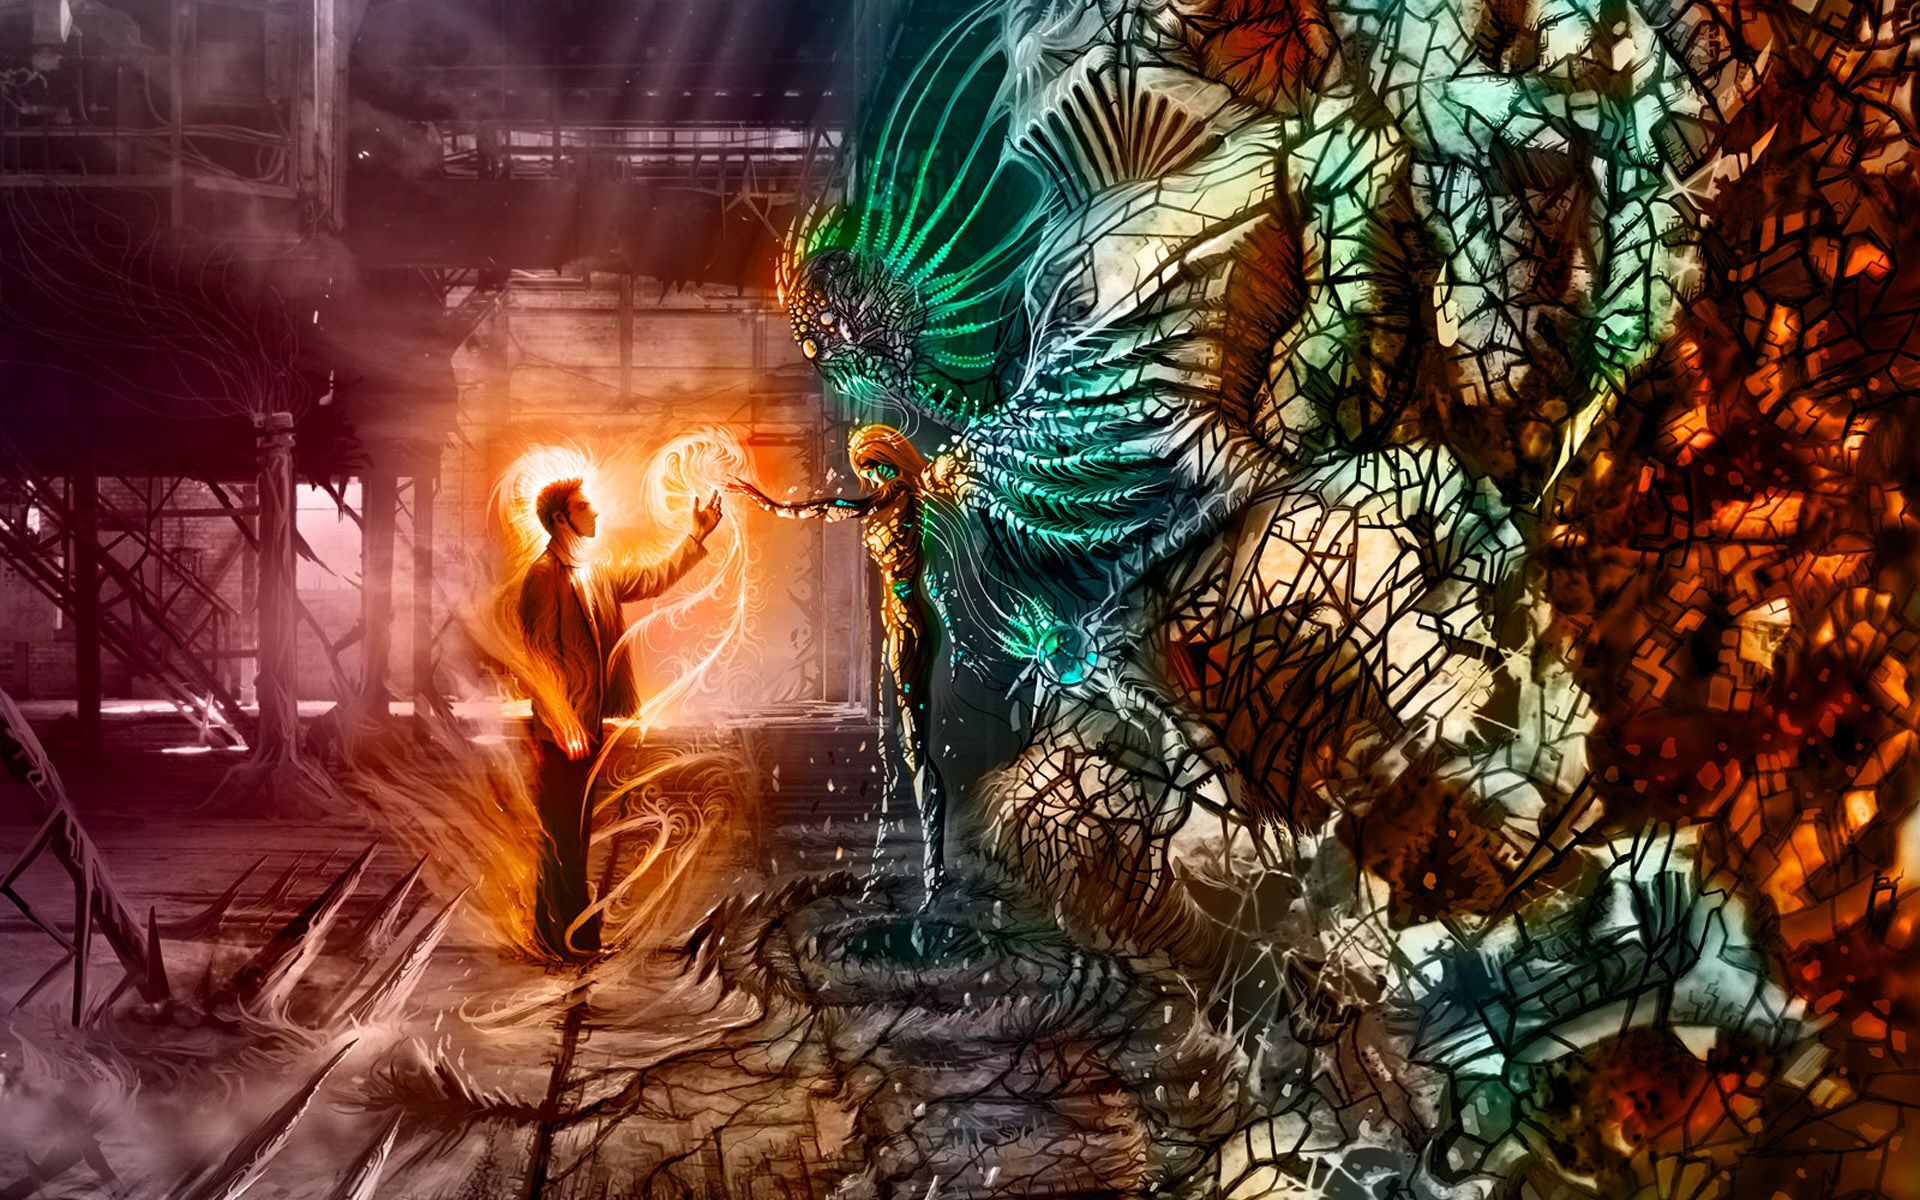 Fantasy artwork by Vitaly S. Alexius - desktop wallpaper.